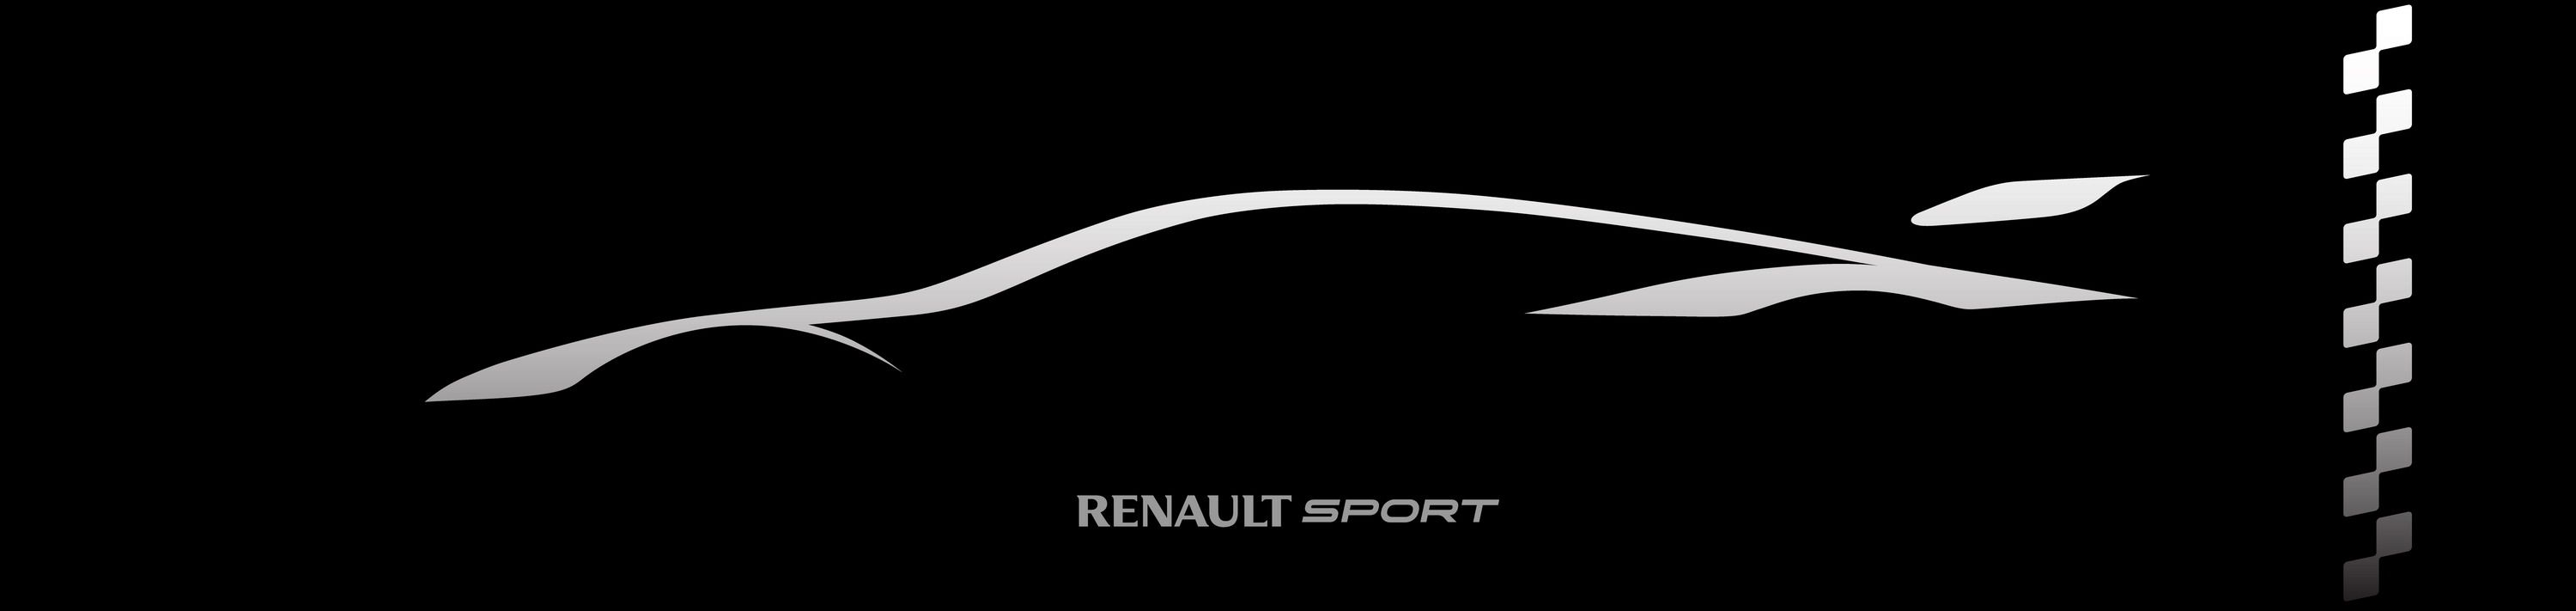 2015 Renaultsport R.S. 01